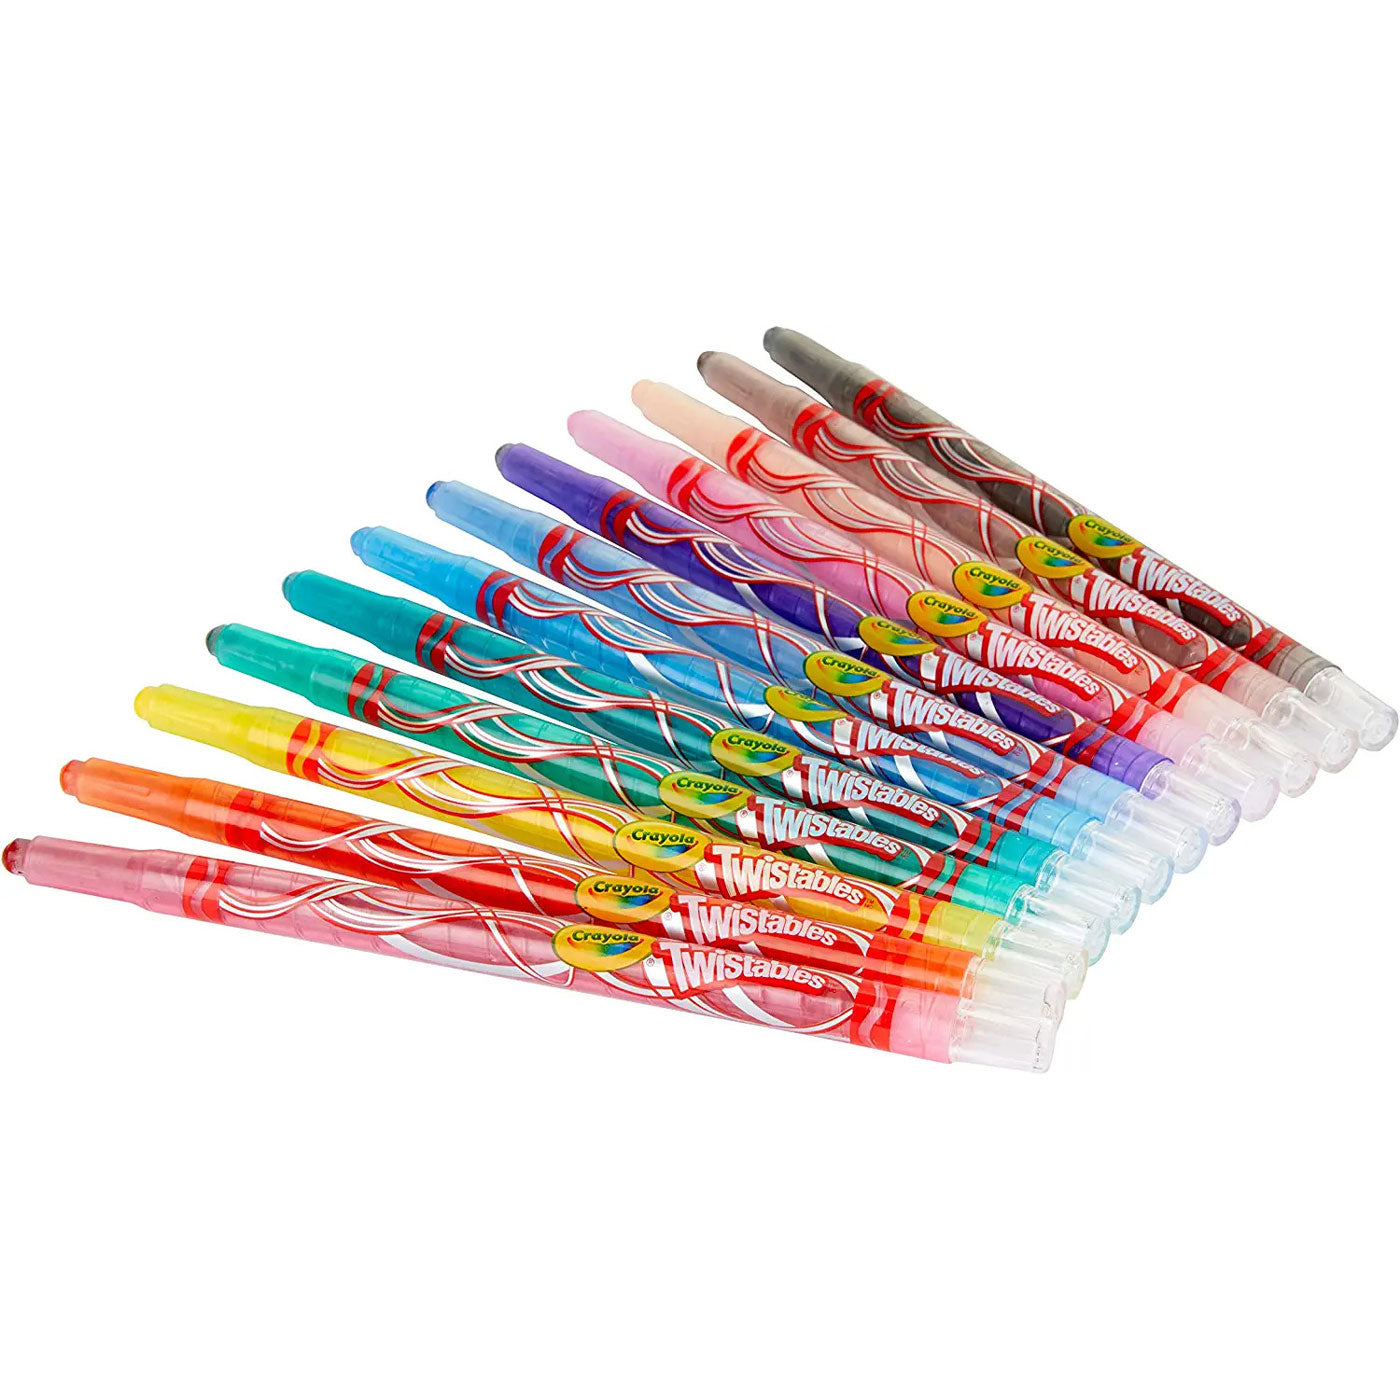 Crayola Twistable Crayons Pack of 12